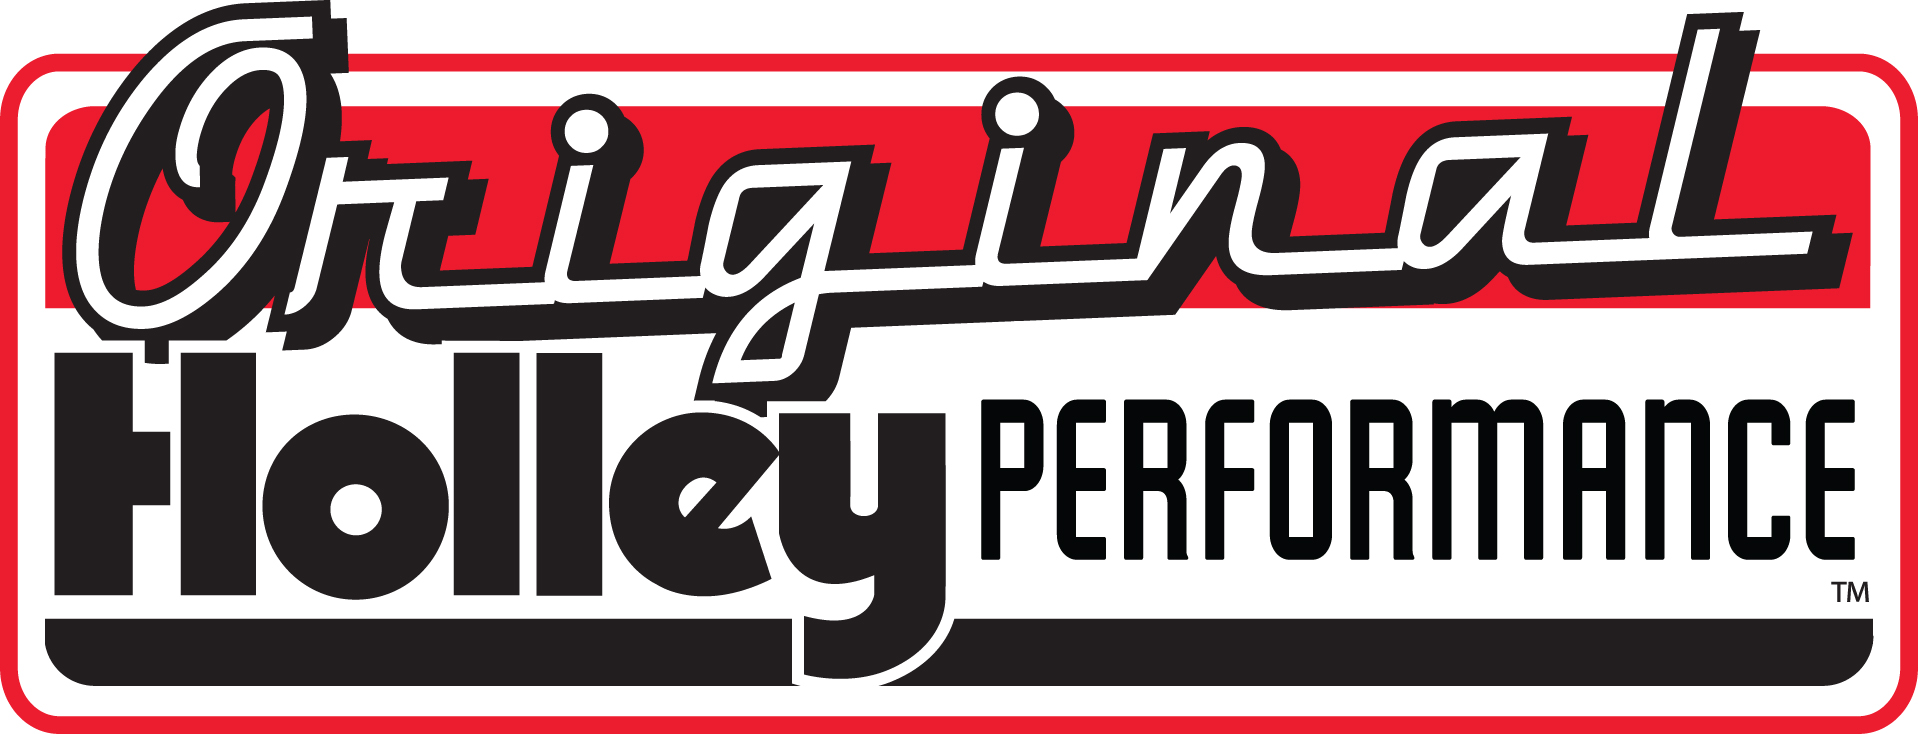 Holley - Original Holley Performance logo